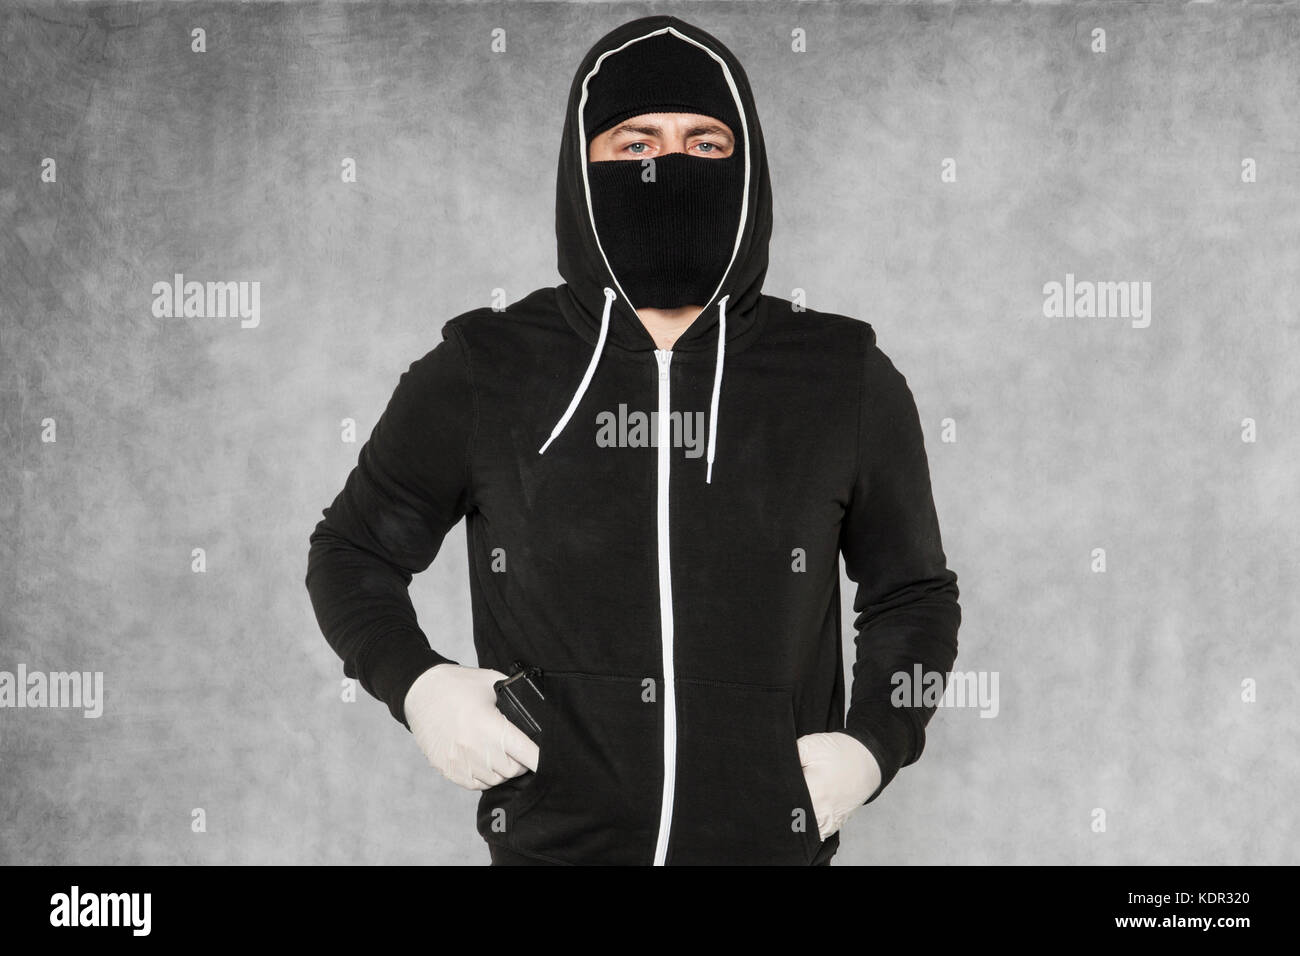 The burglar holds the gun in his pocket Stock Photo